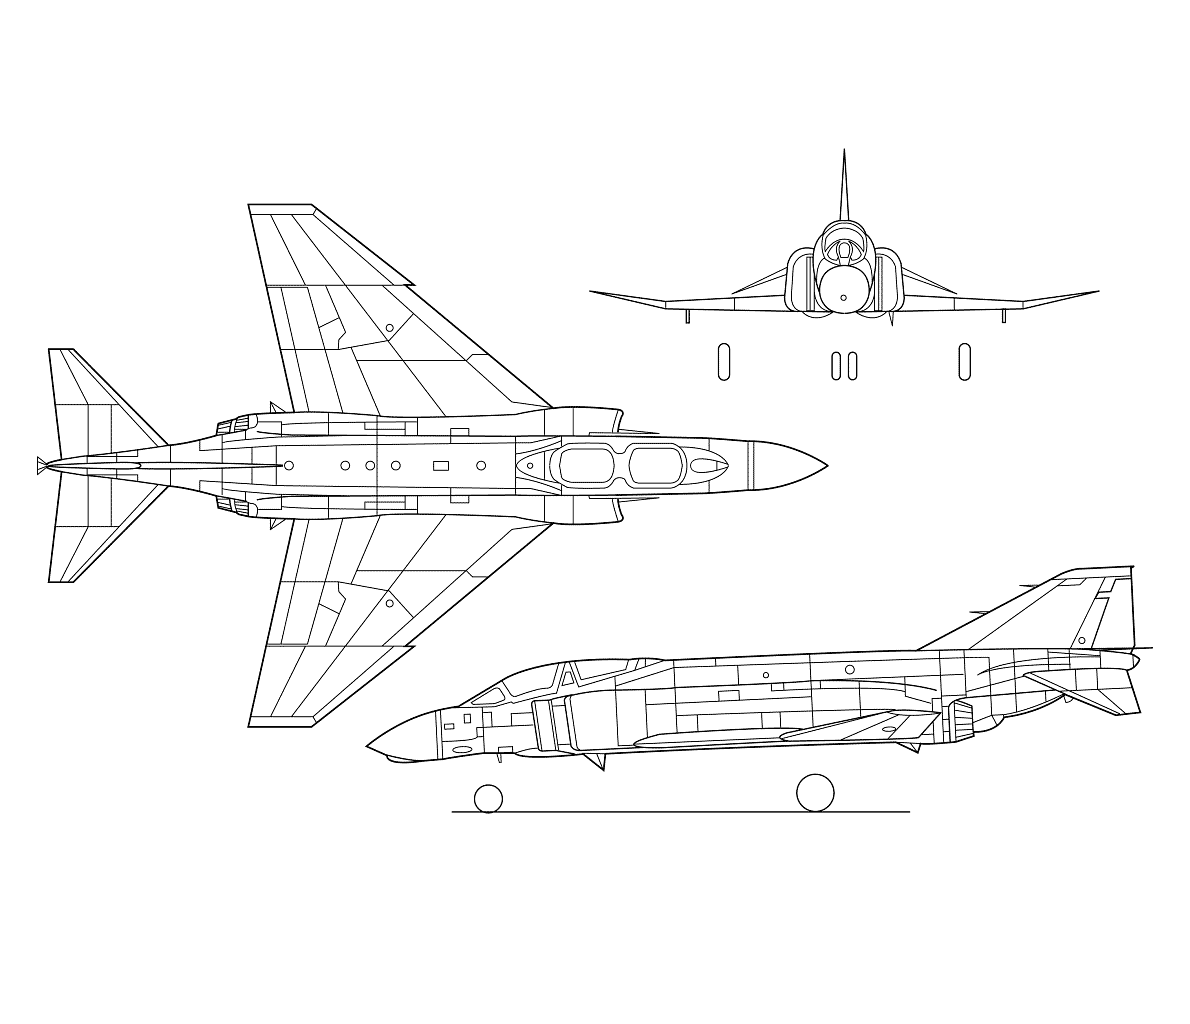 F-4 Phantom II blueprint